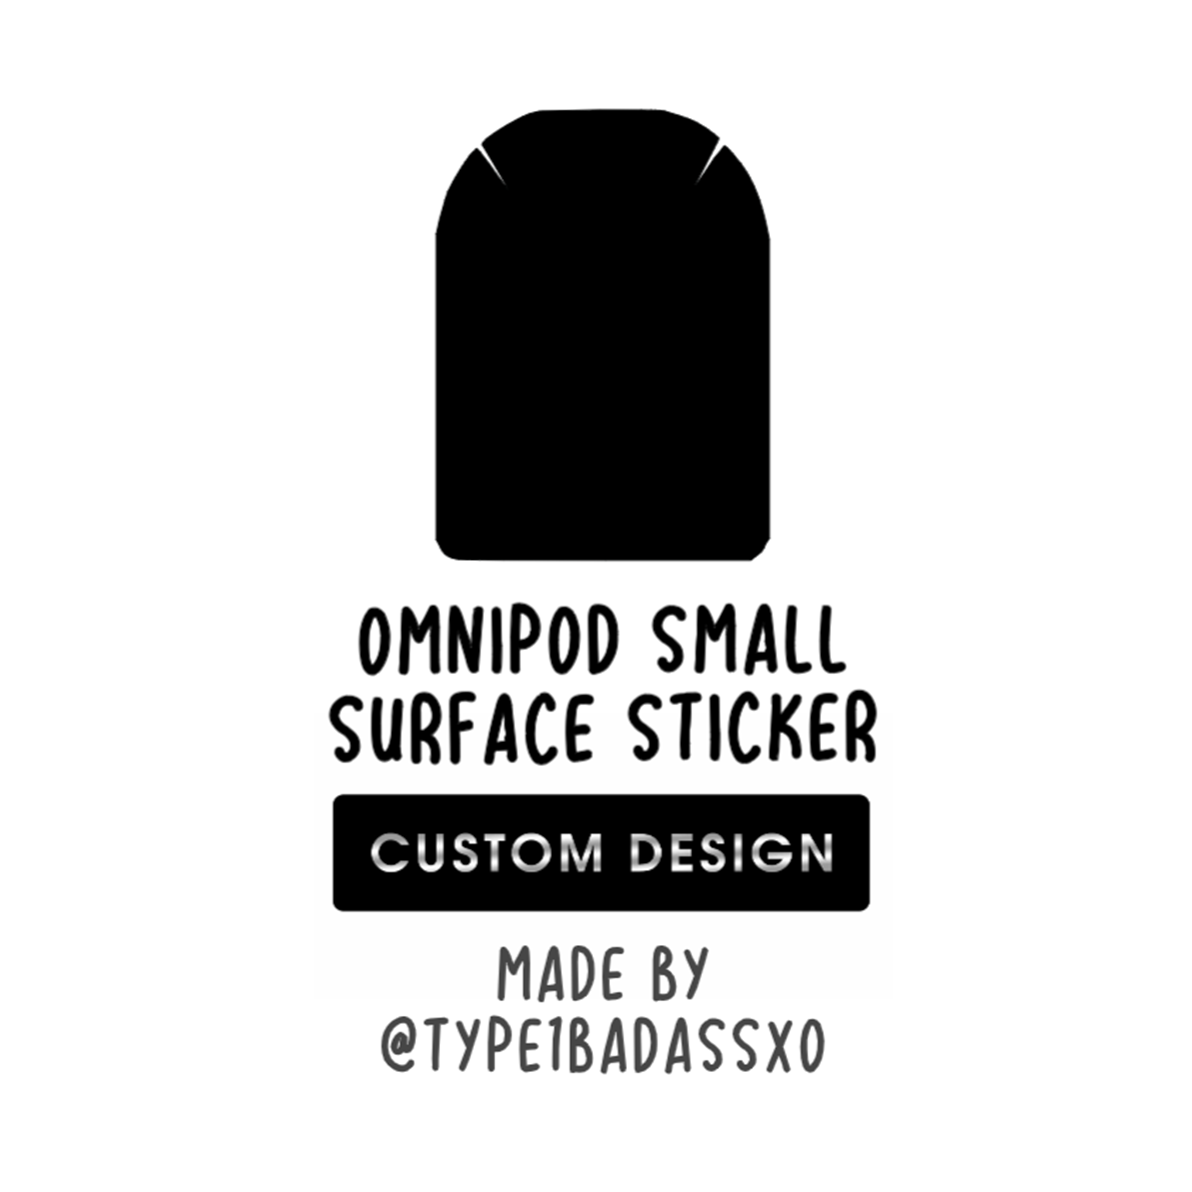 Custom Design - Omnipod Small Surface Sticker